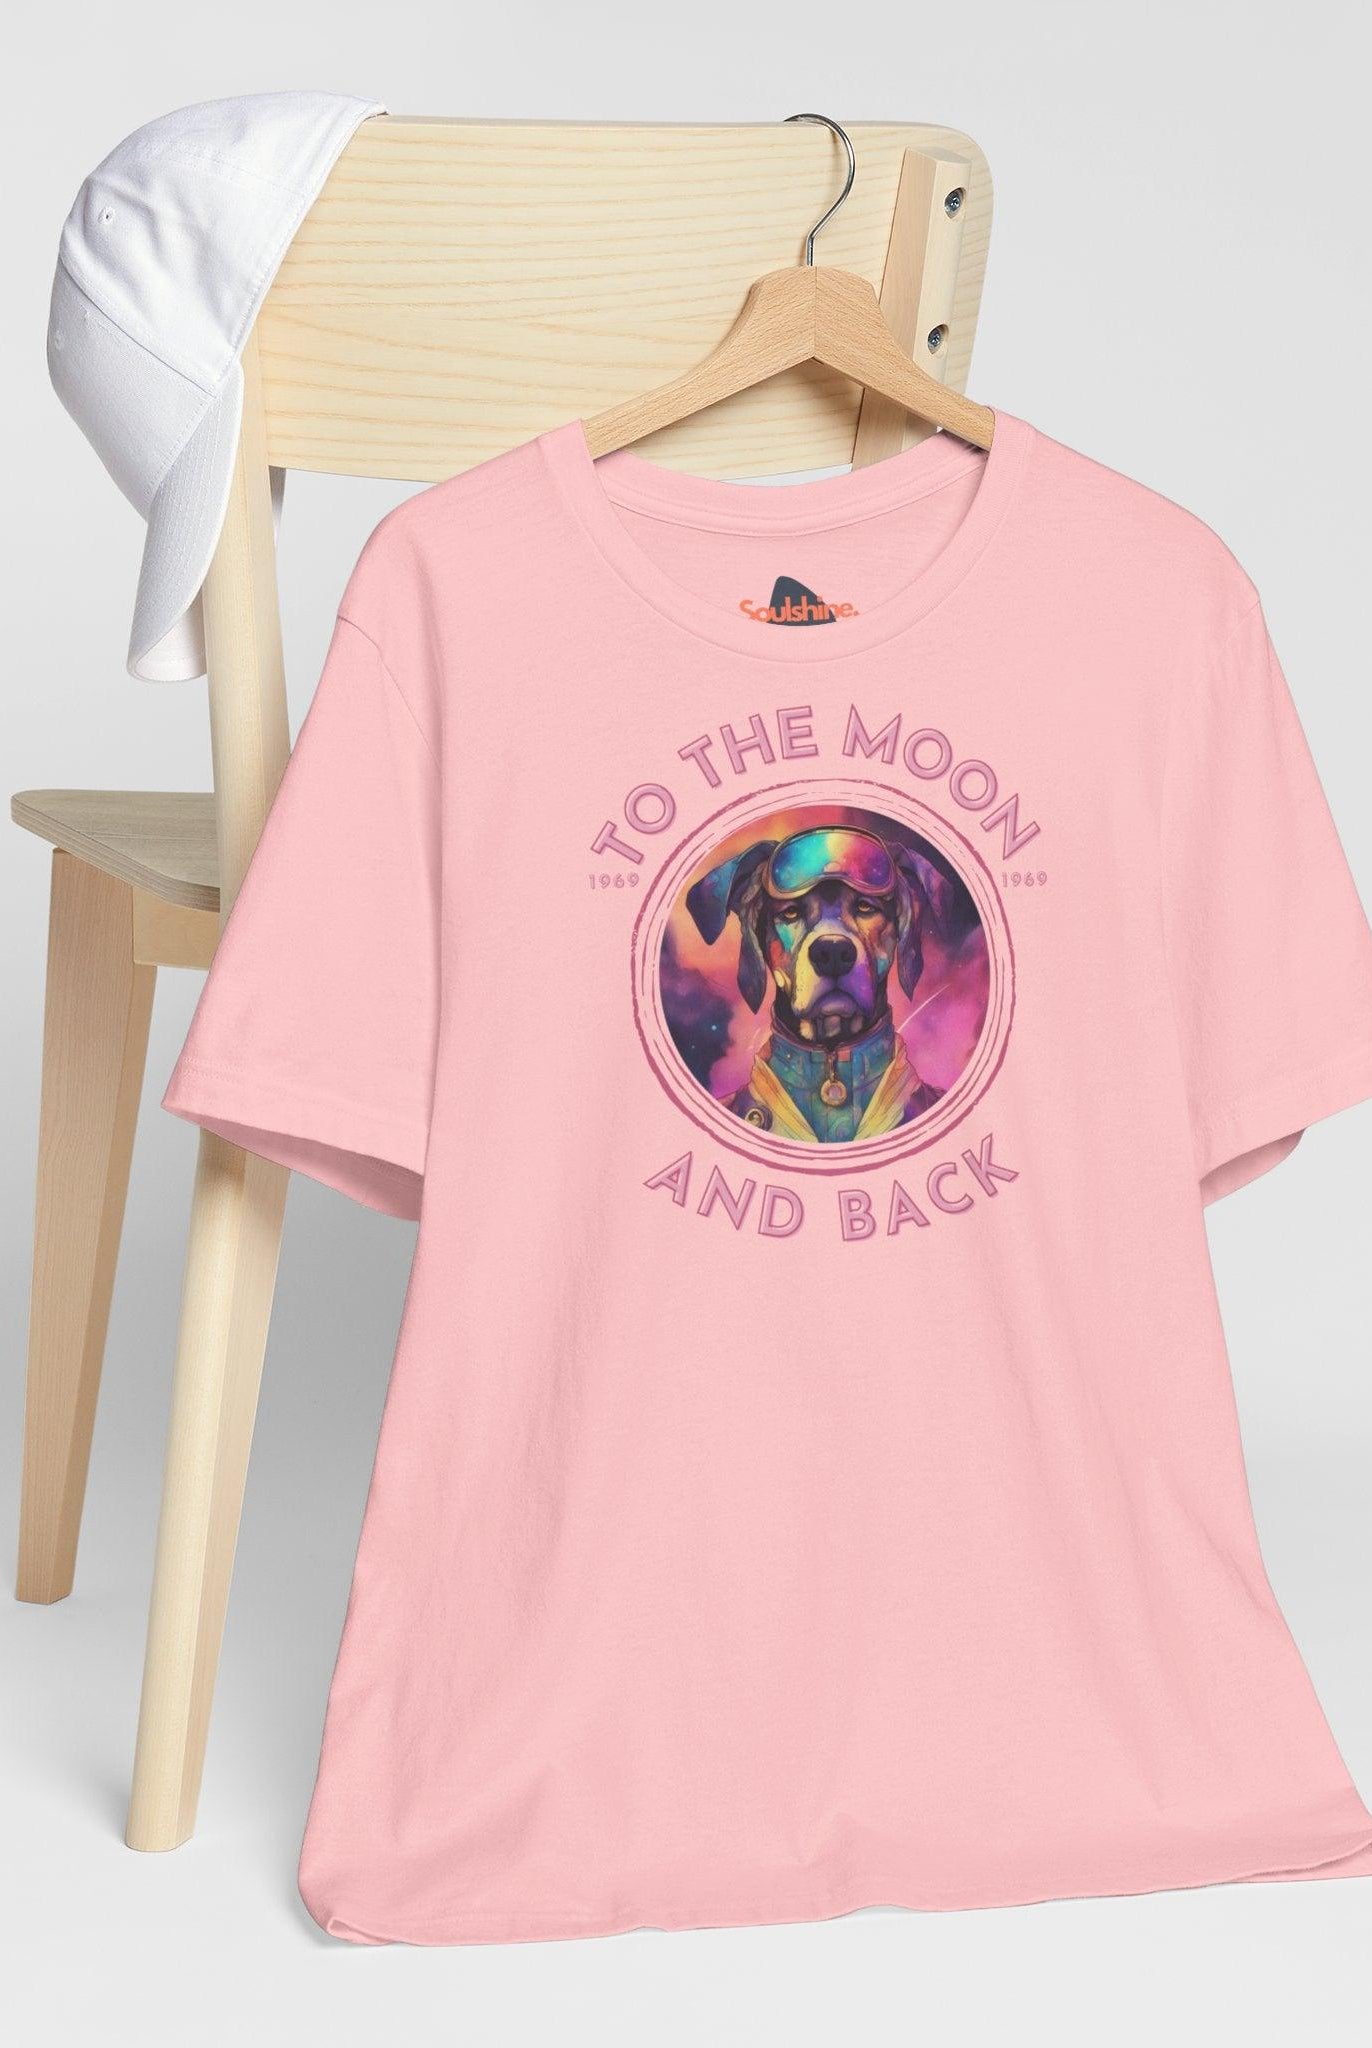 To the moon and back - Astrodog - Dog T-Shirt - Astronaut - Soulshinecreators - Bella & Canvas - EU - Soulshinecreators